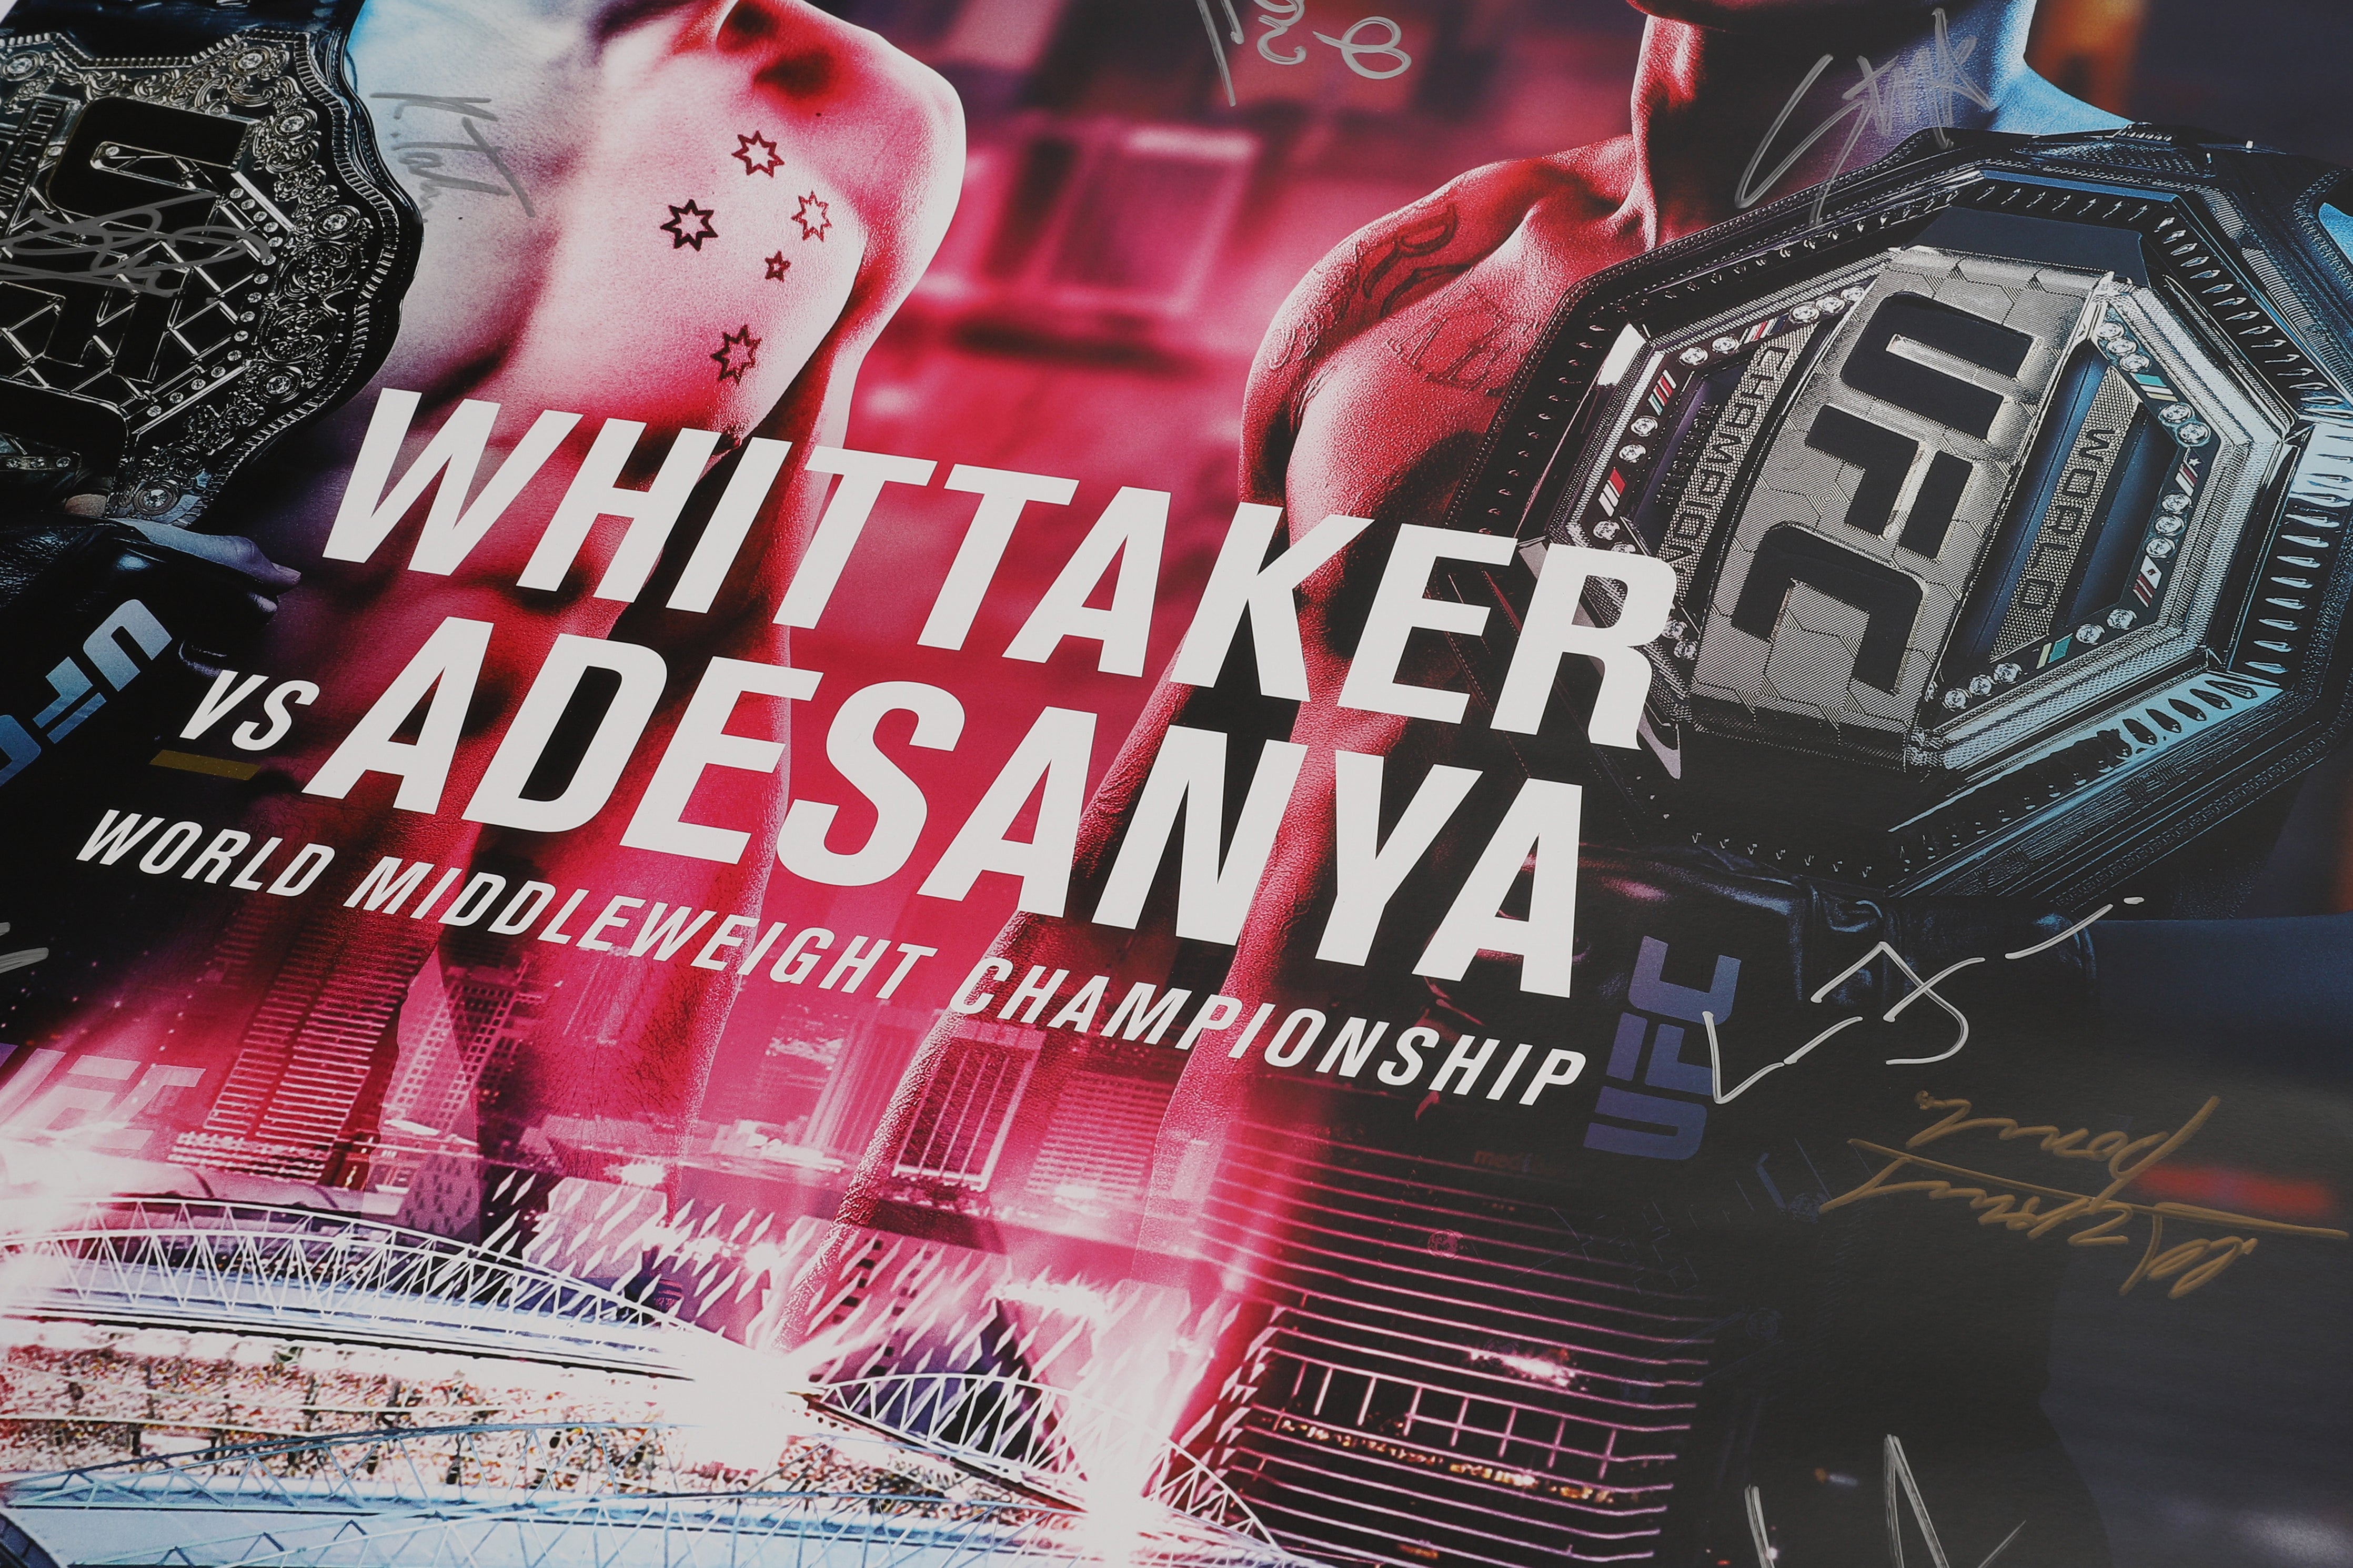 UFC 243: Whittaker vs Adesanya Autographed Poster